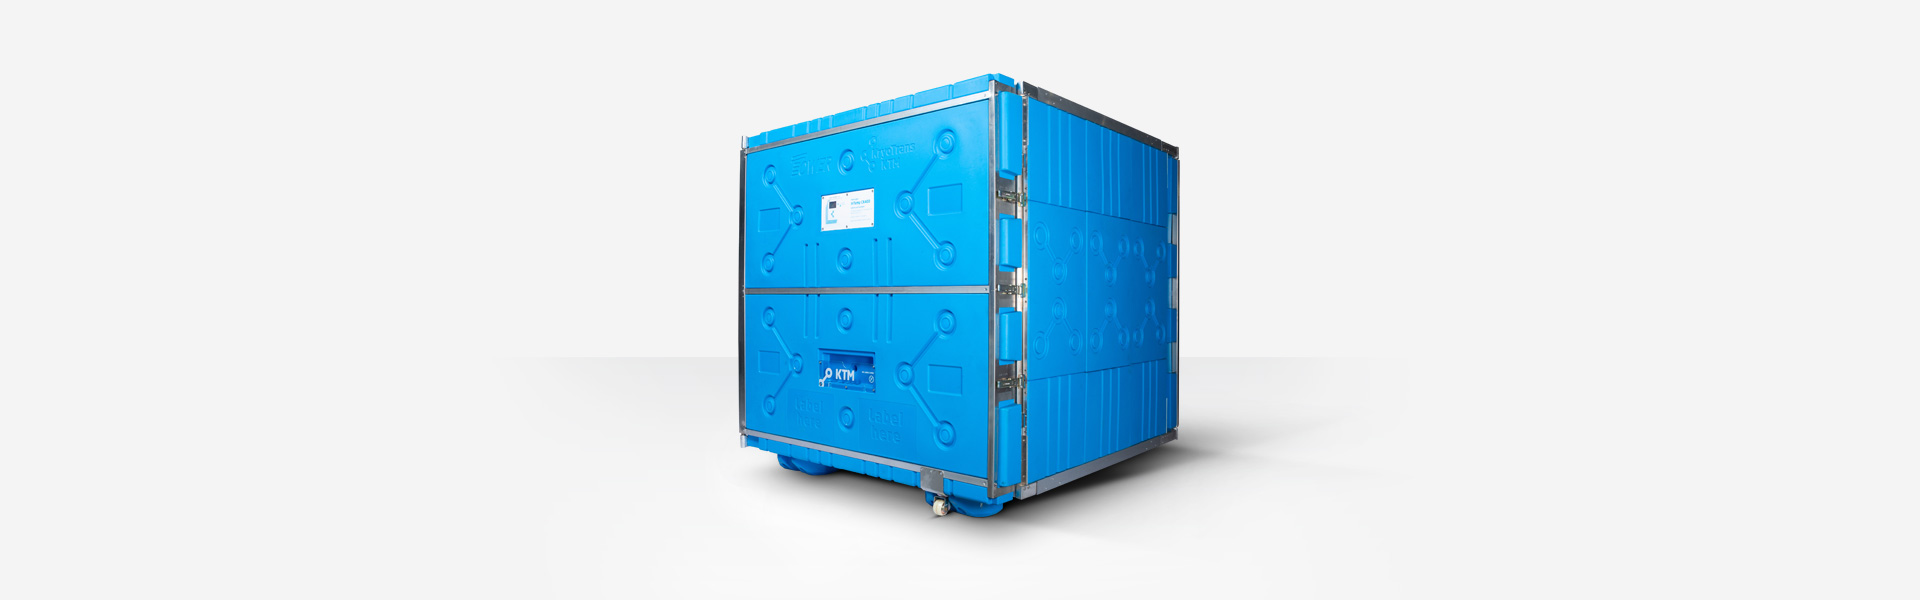 KTM32 single US pallet container